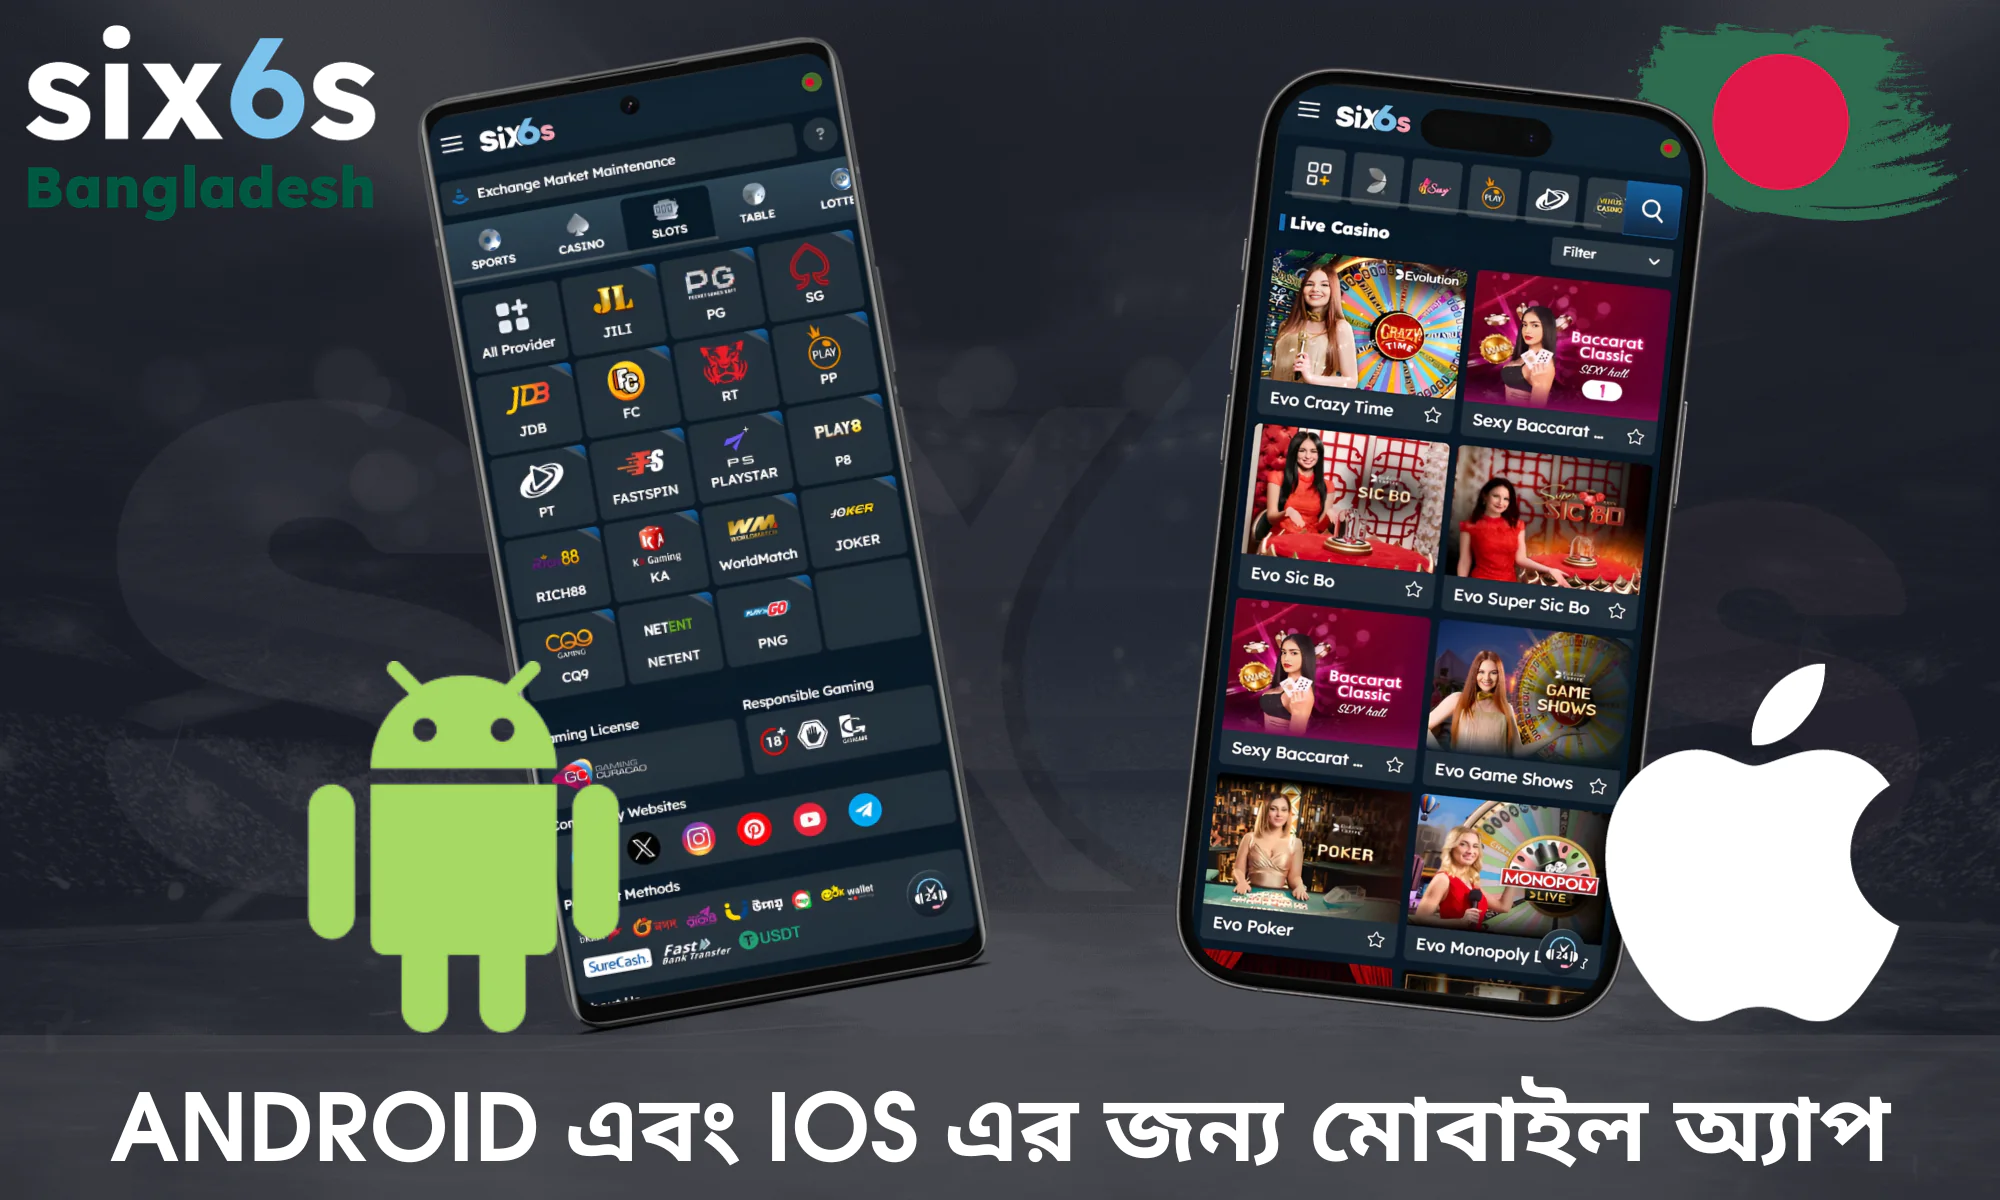 Six6s Bangladesh - Android এবং IOS এর জন্য একটি বিশেষ অপ্টিমাইজড অ্যাপ রয়েছে